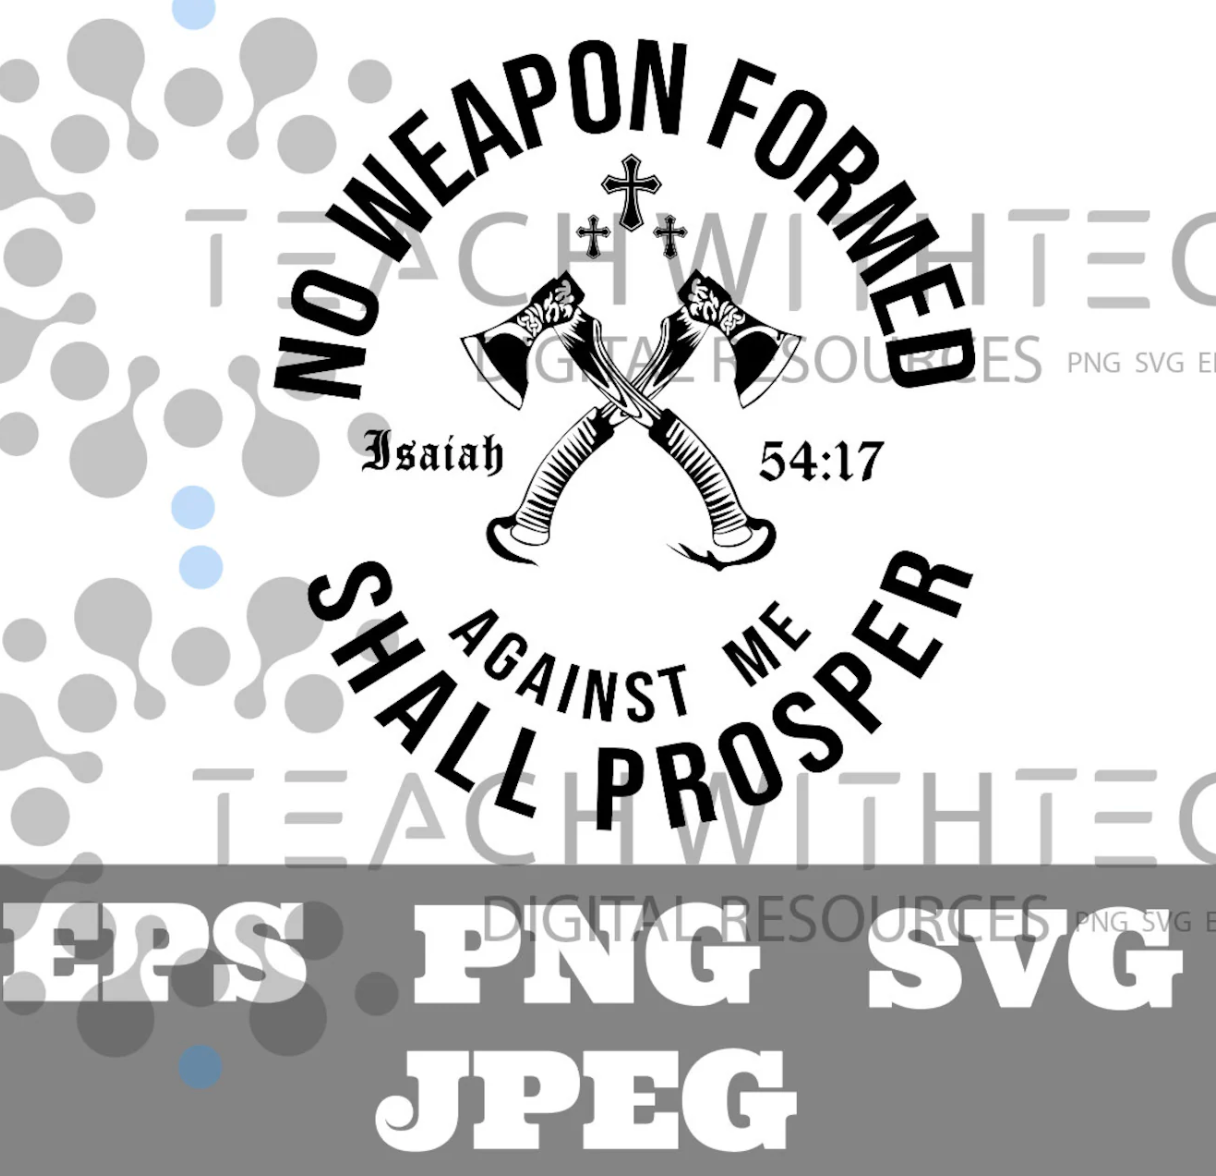 No weapon formed against me will prosper Isaiah 54:17 - cut file SVG eps png, Jesus cut file, prayer svg, Pray svg, Christian Bible verse